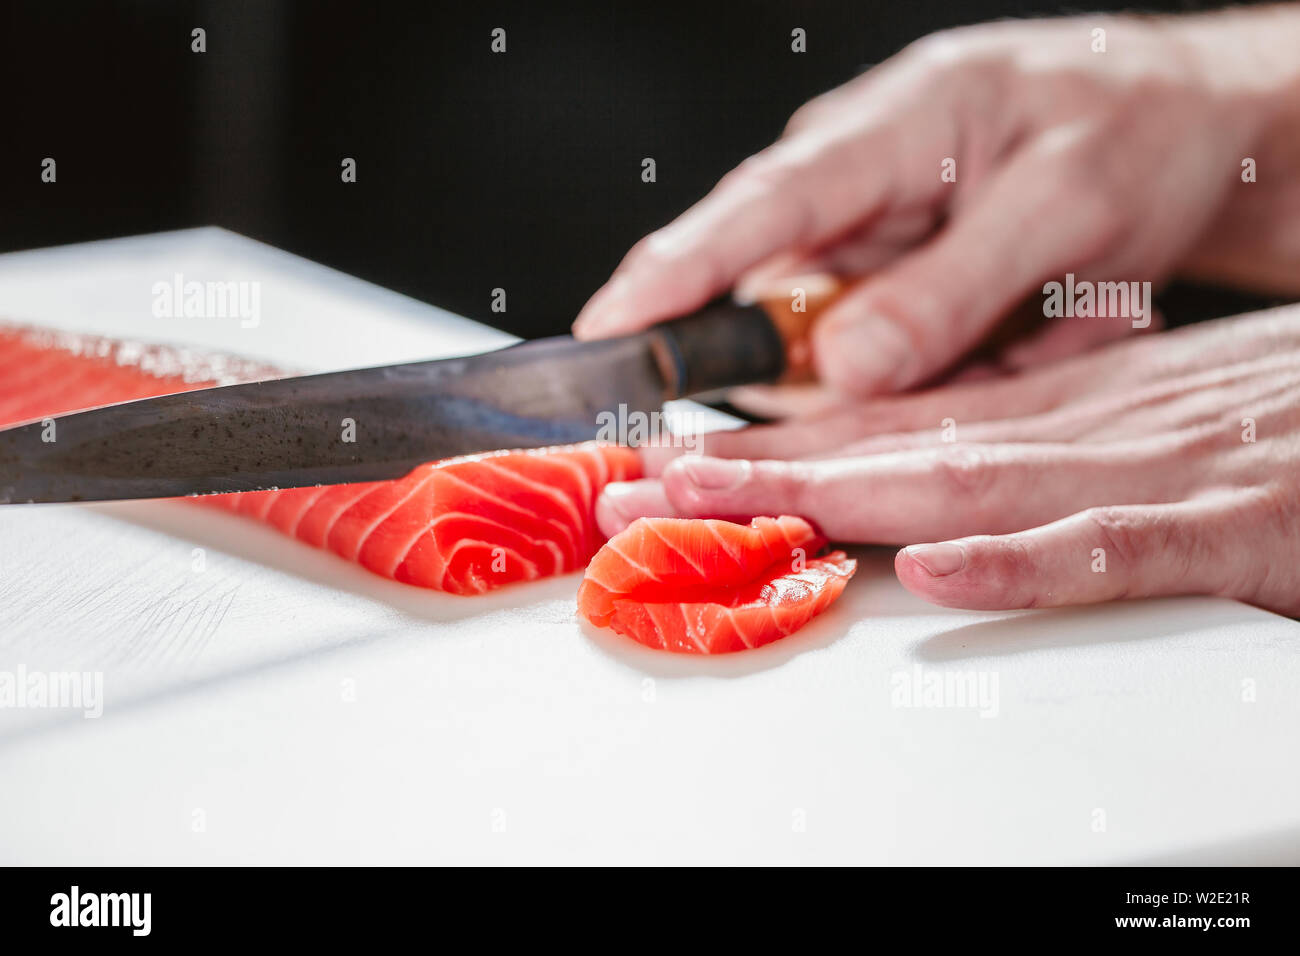 Cook cutting fresh salmon fillet Stock Photo